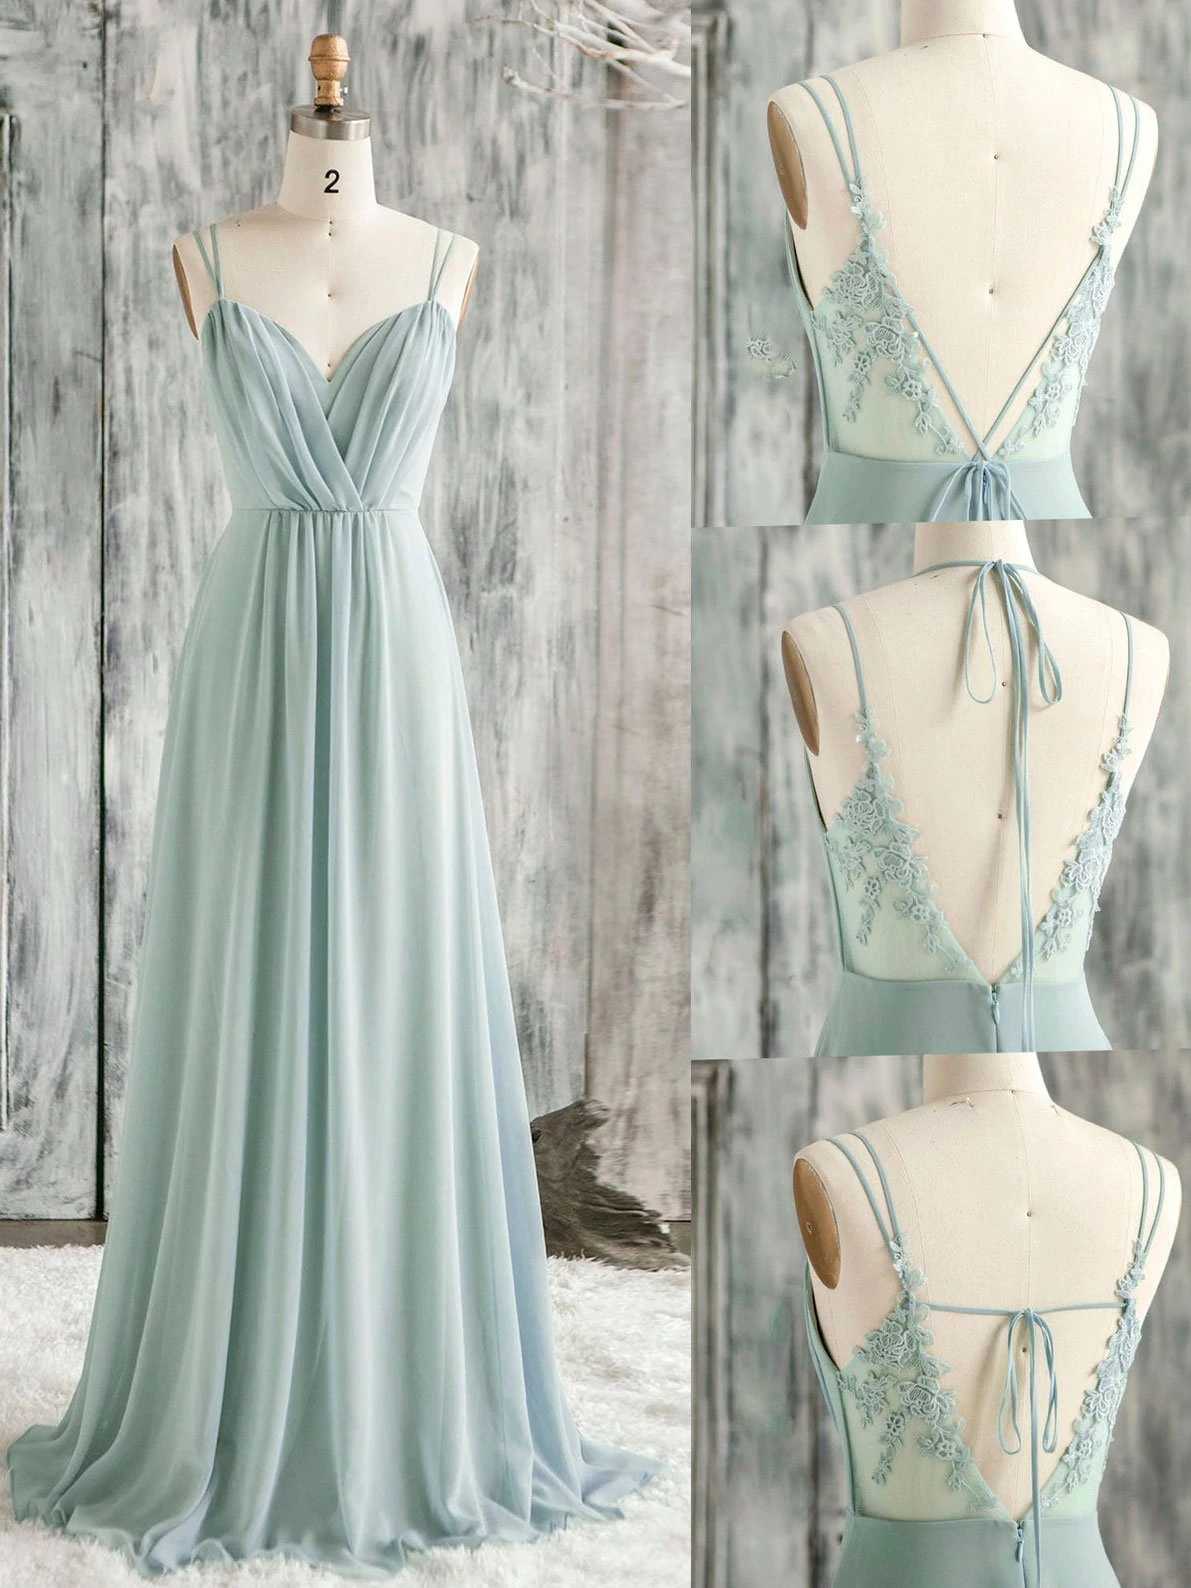 lace sage green bridesmaid dresses long spaghetti straps chiffon a line cheap wedding party dresses robe ceremonie femme